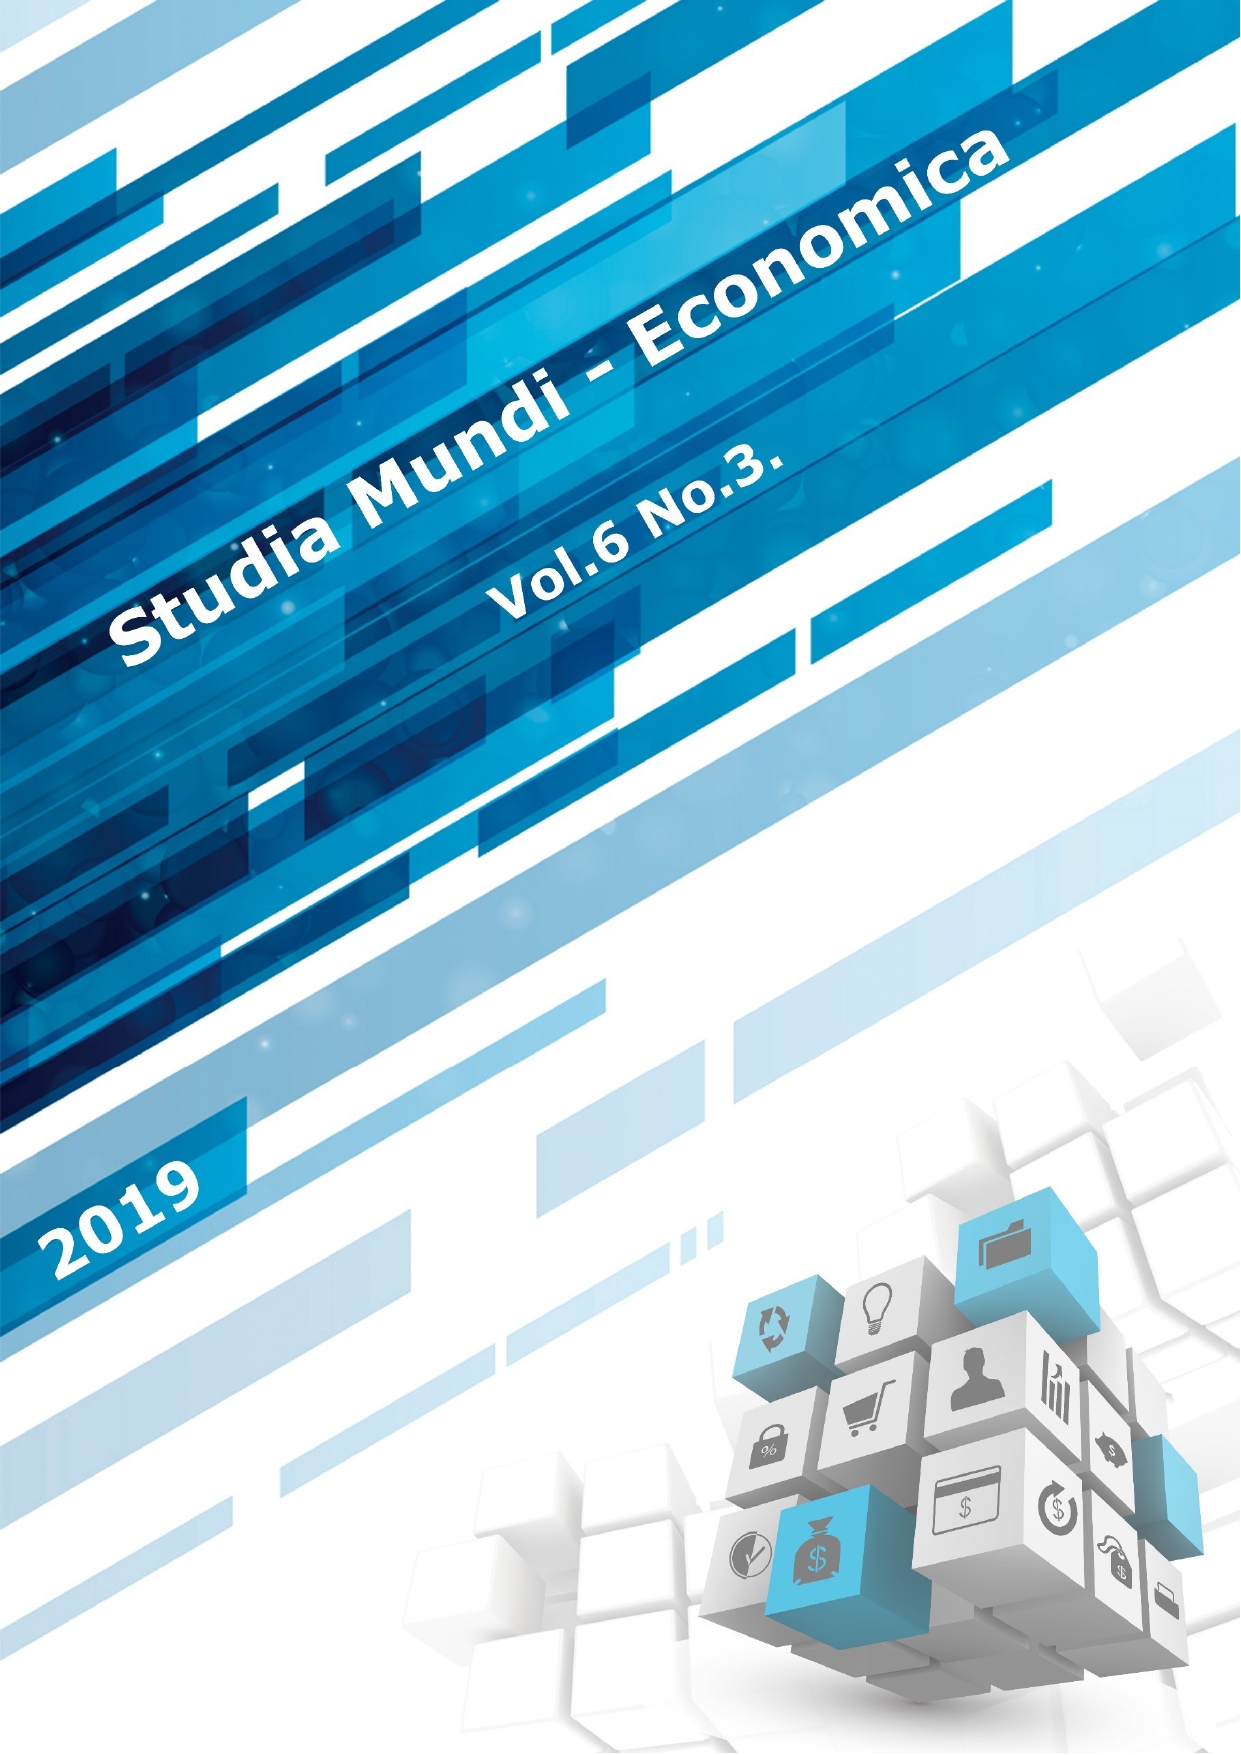 					View Évf. 6 szám 3 (2019): Studia Mundi – Economica
				